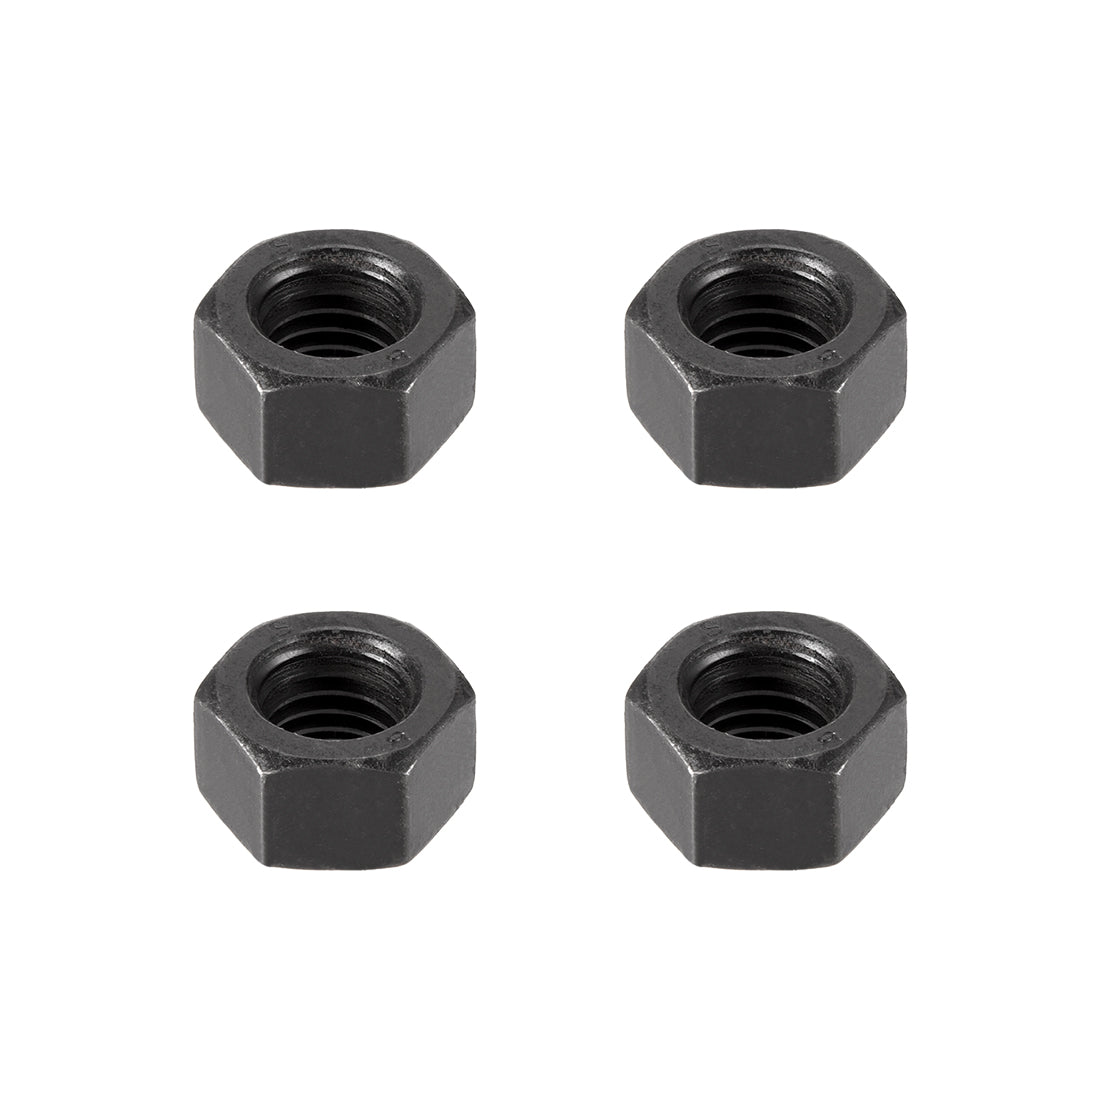 Uxcell Uxcell M22 Metric Carbon Steel Grade 8.8 Hexagon Hex Nut Black 4pcs